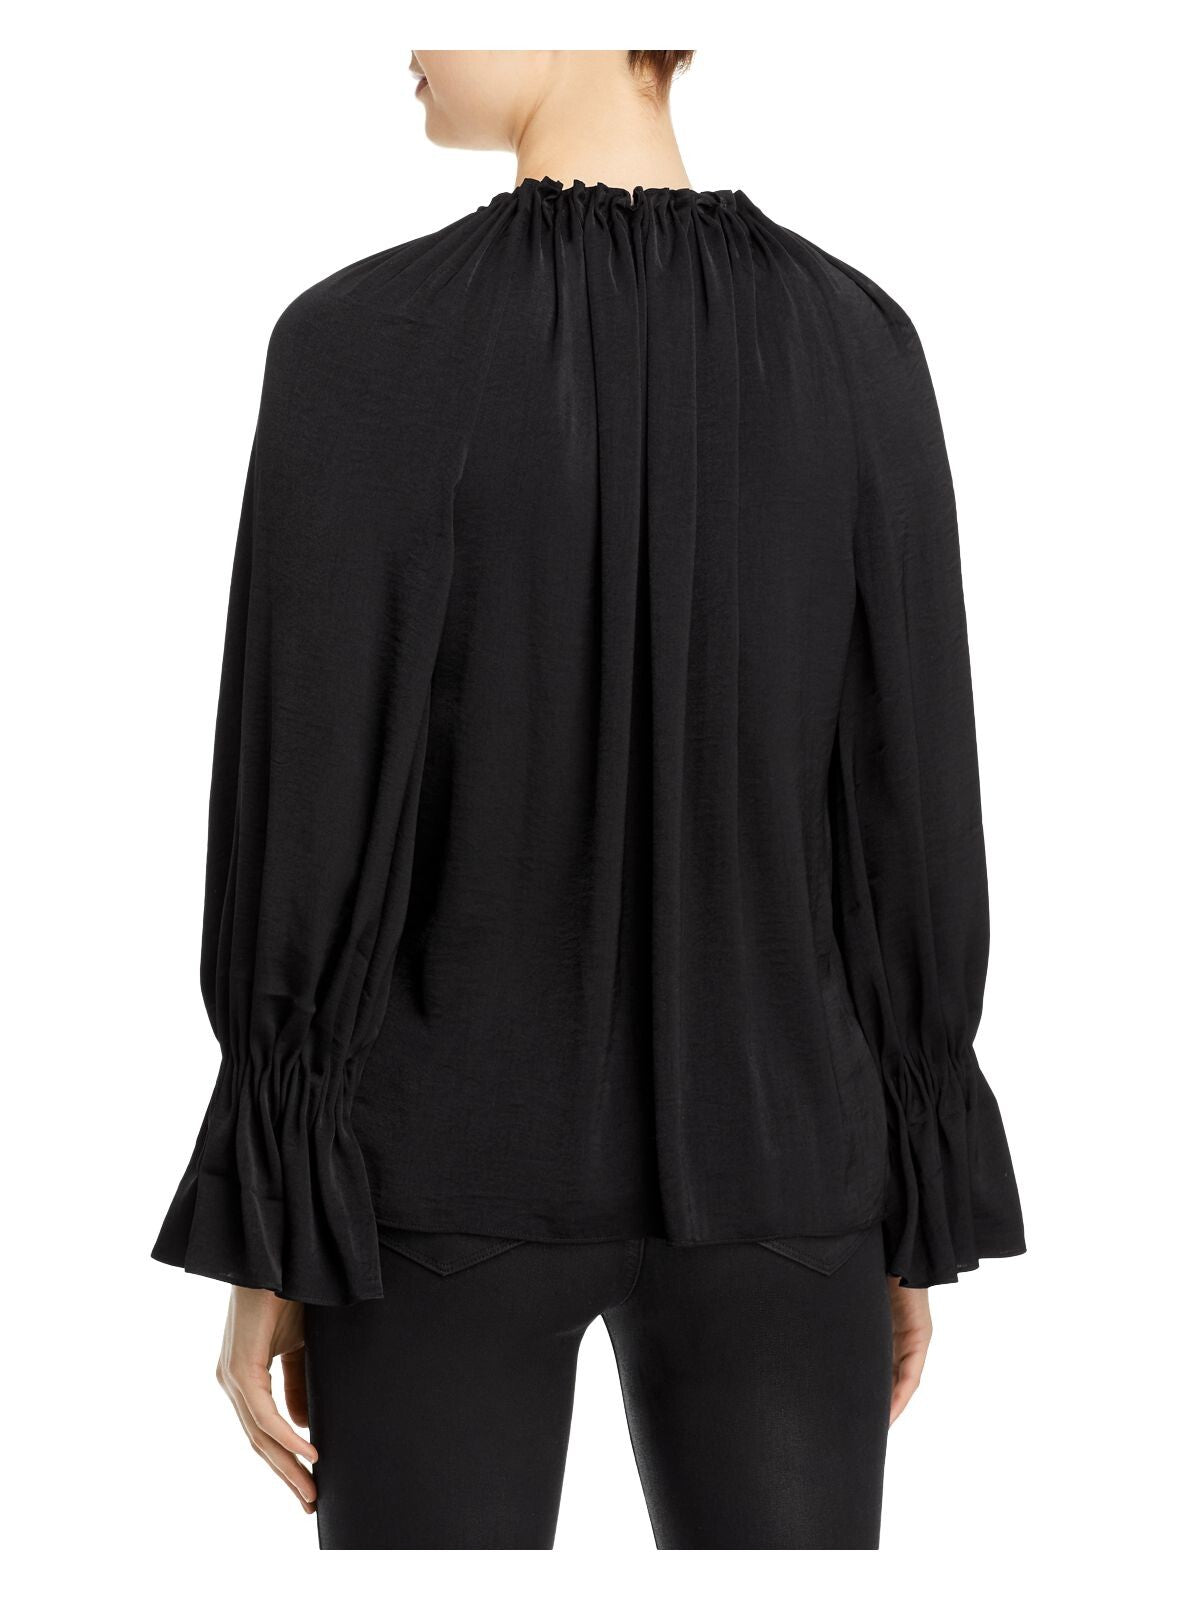 KOBI HALPERIN Womens Black Tie Sheer Frances Blouse Elastic Cuffs Long Sleeve V Neck Top S